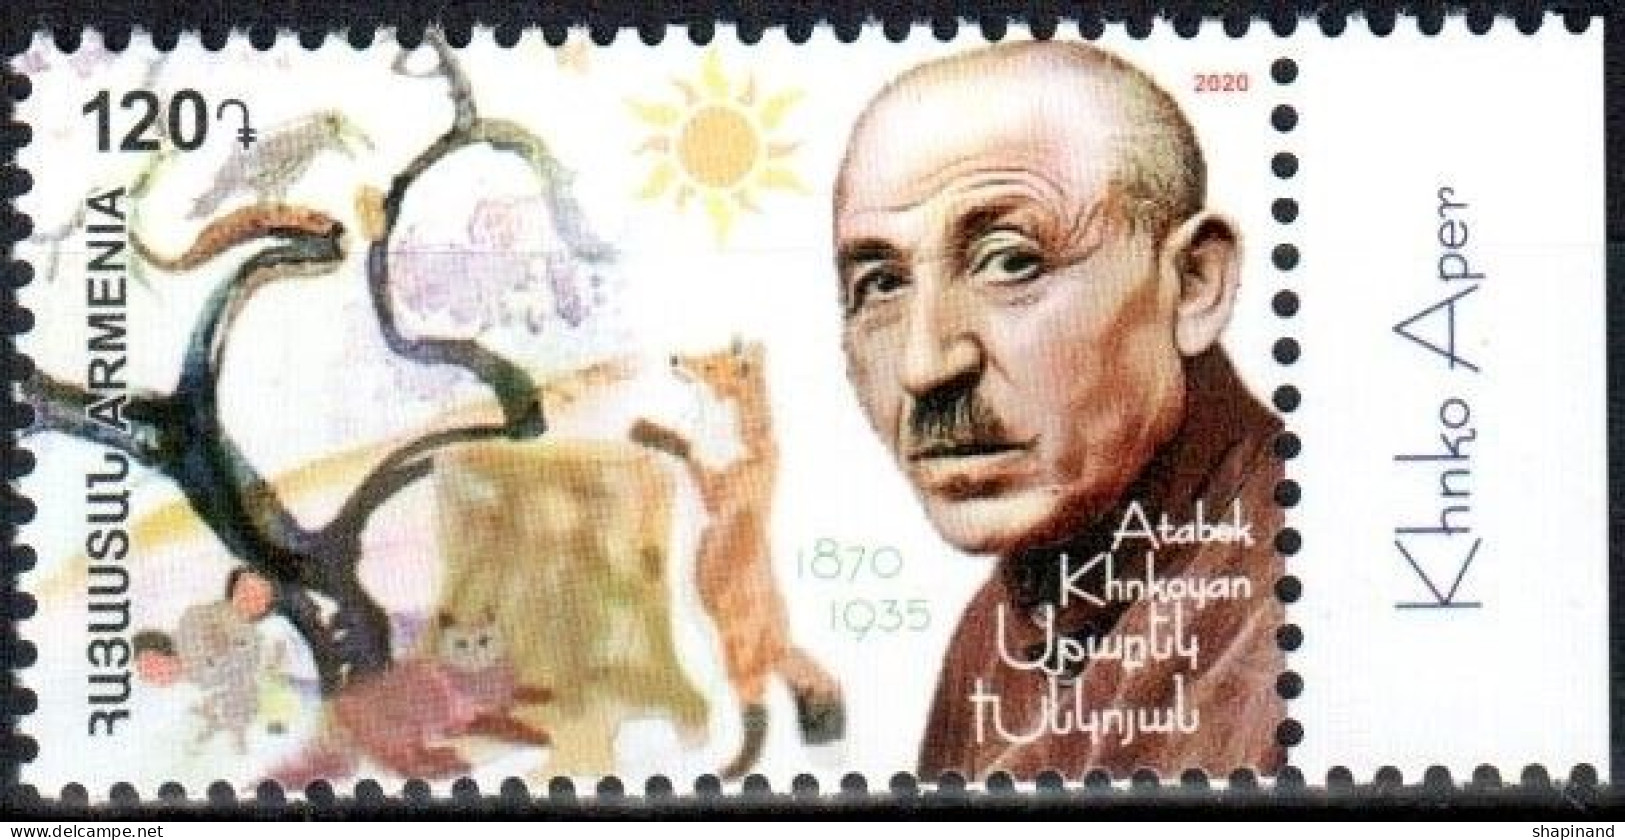 Armenia 2020 The Prominent Armenian Children’s Writer Atabek Khnkoyan (Khnko Aper, 1870-1935) 1v Quality:100% - Armenia